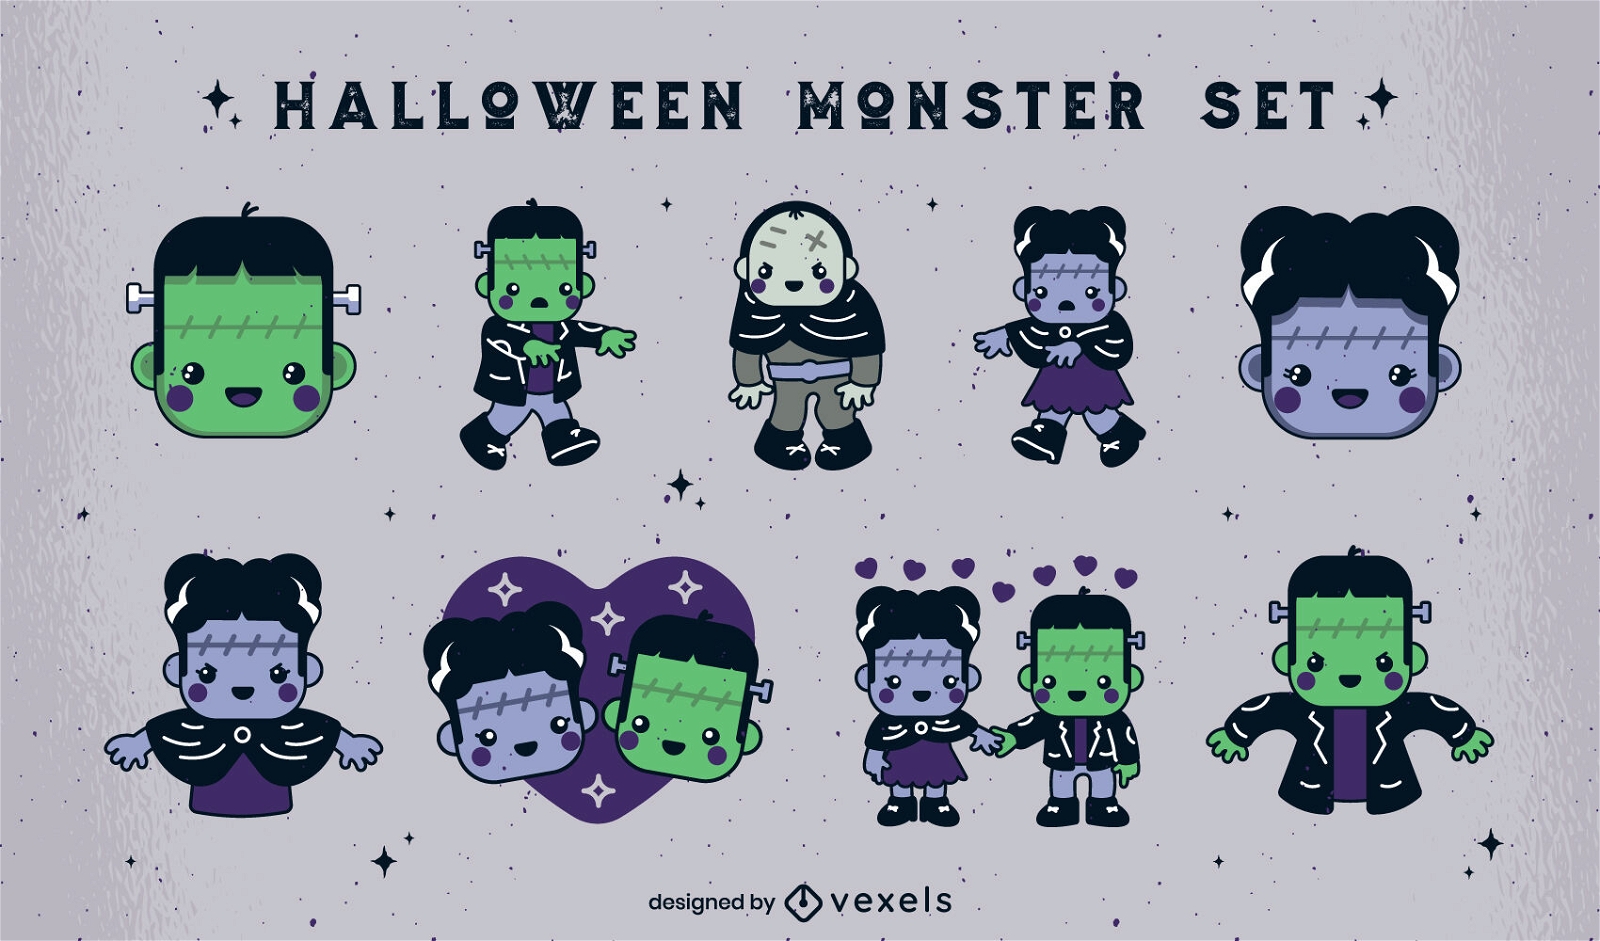 Halloween s??e Monsterfiguren gesetzt